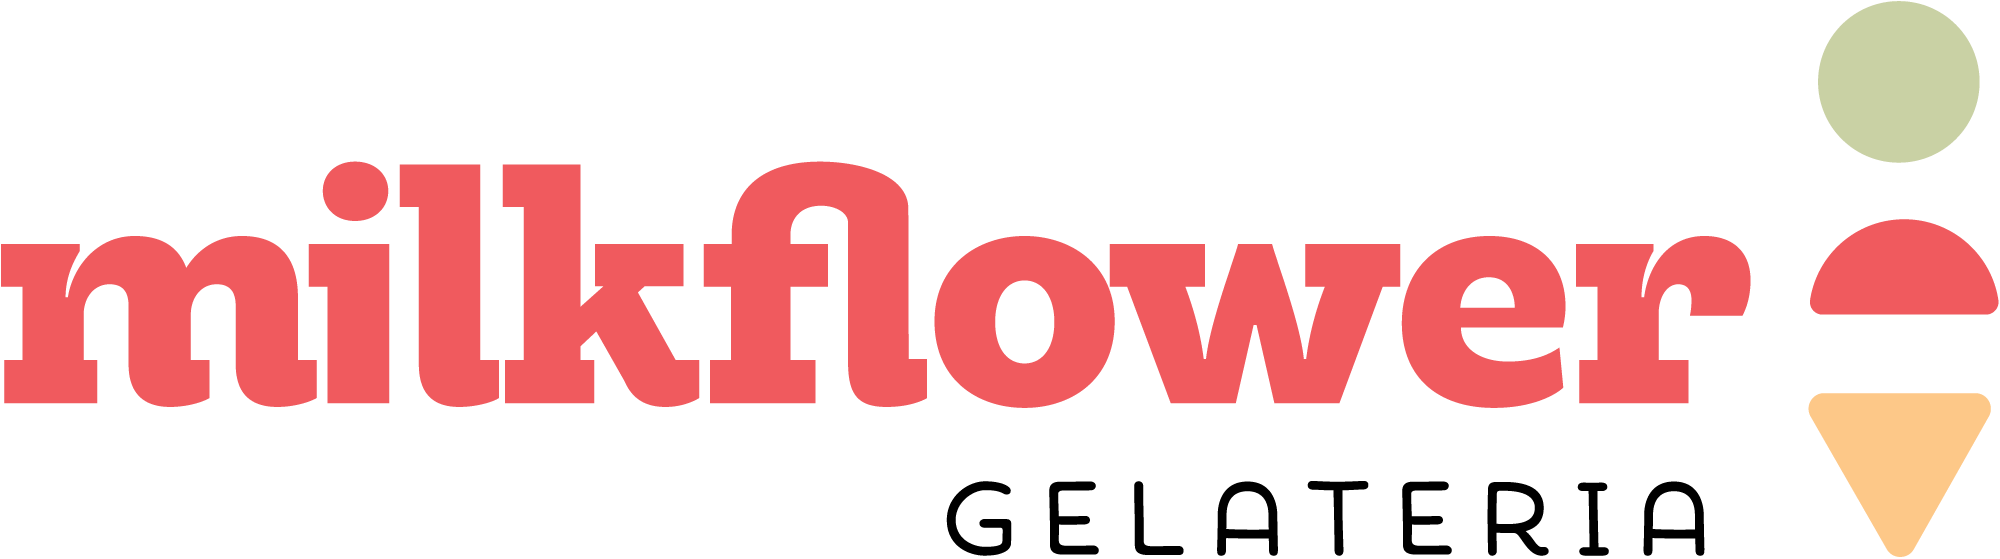 Milkflower Gelateria logo